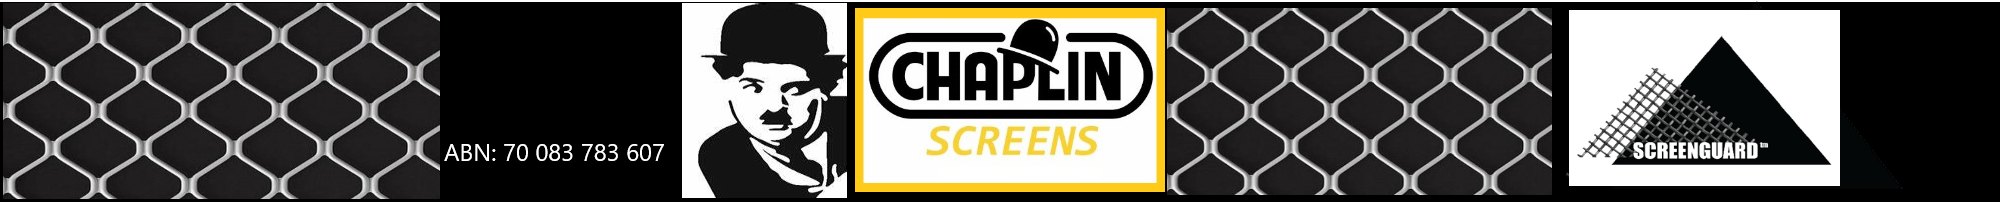 Chaplin Screens